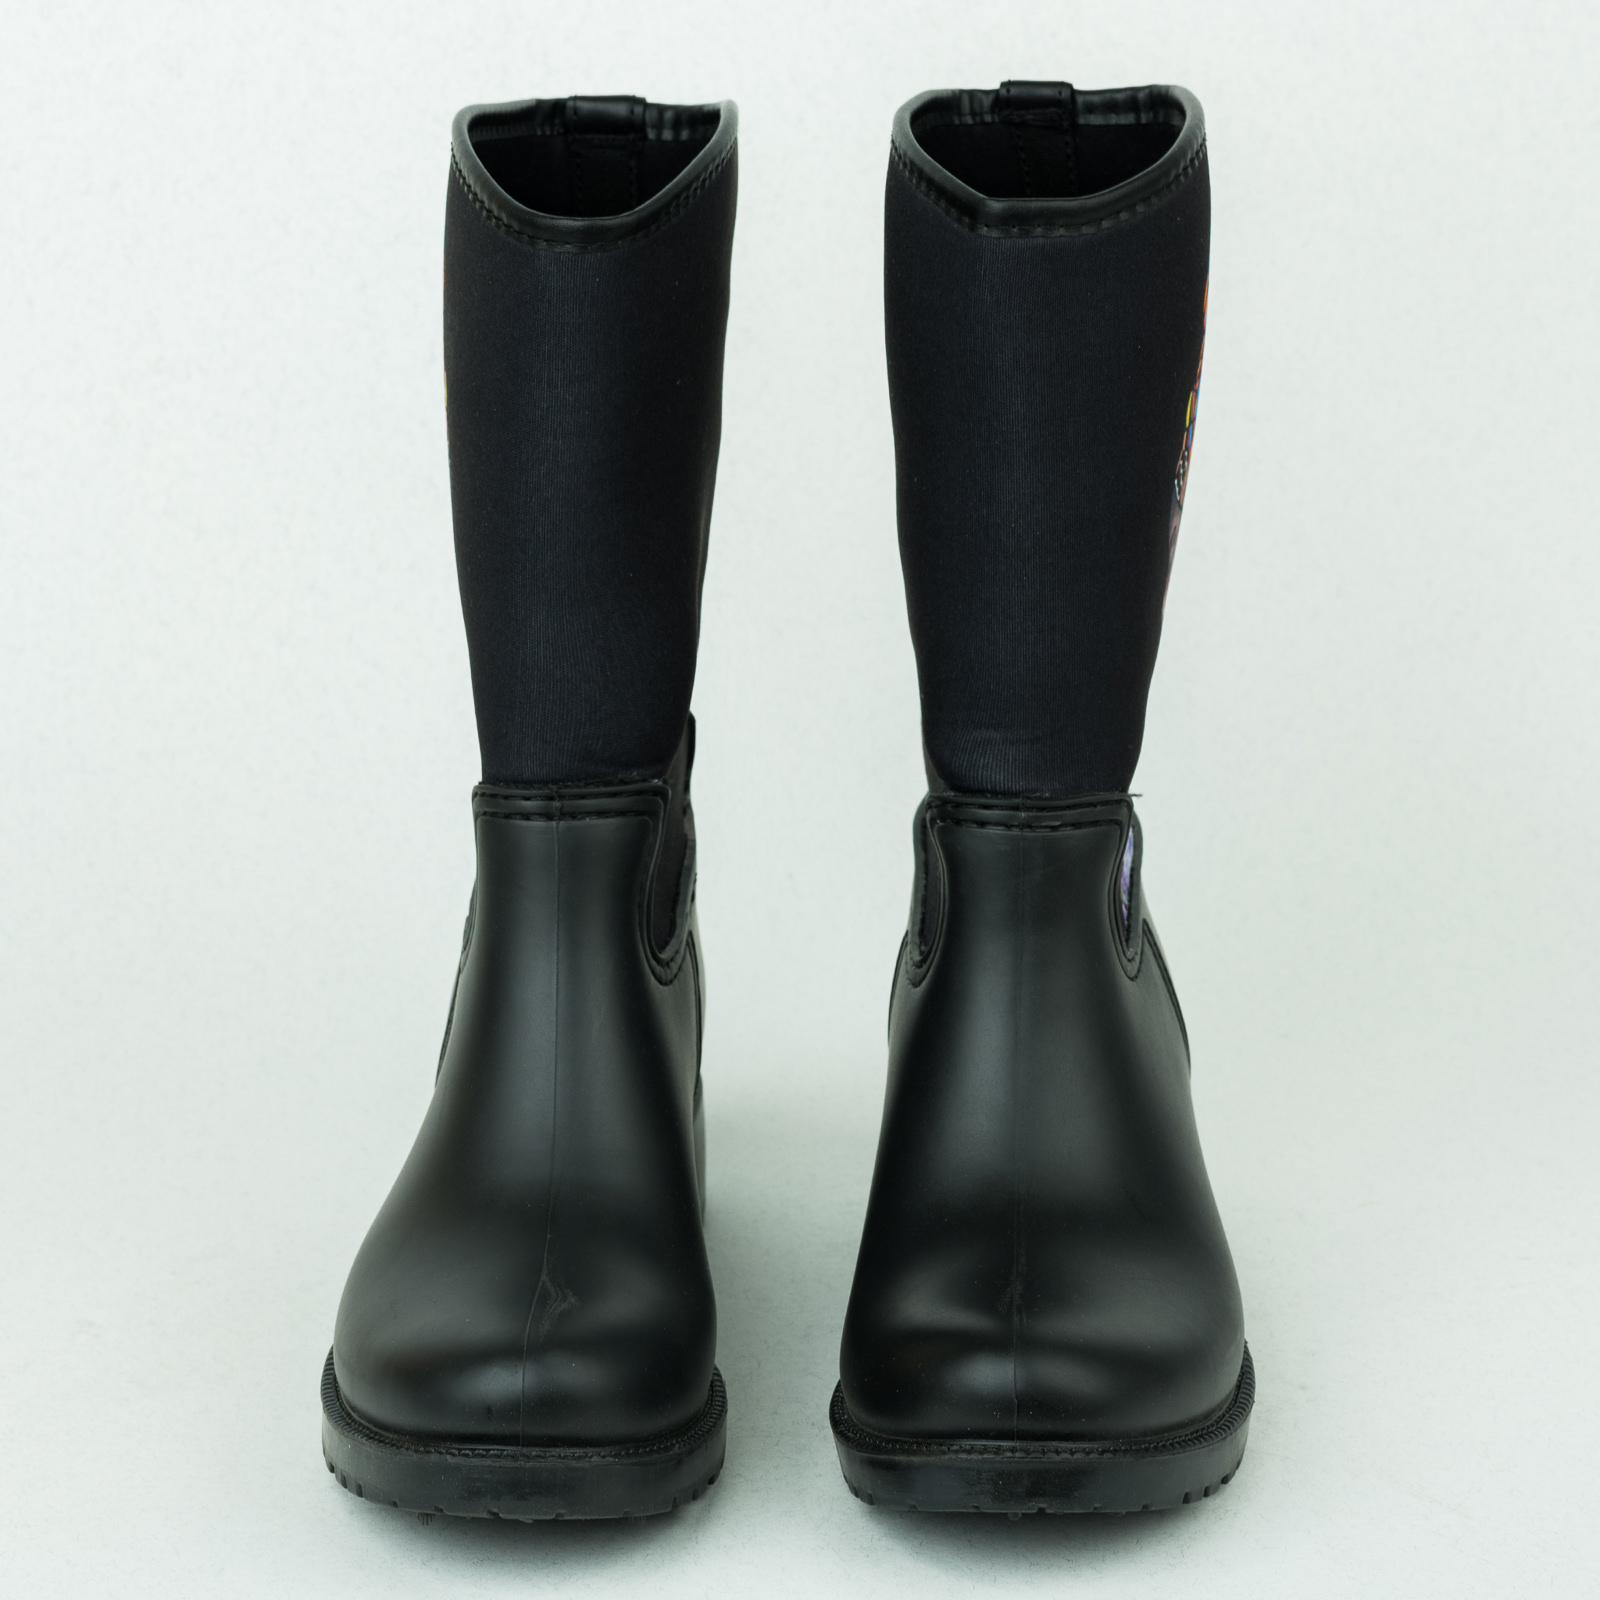 Waterproof boots B390 - BLACK